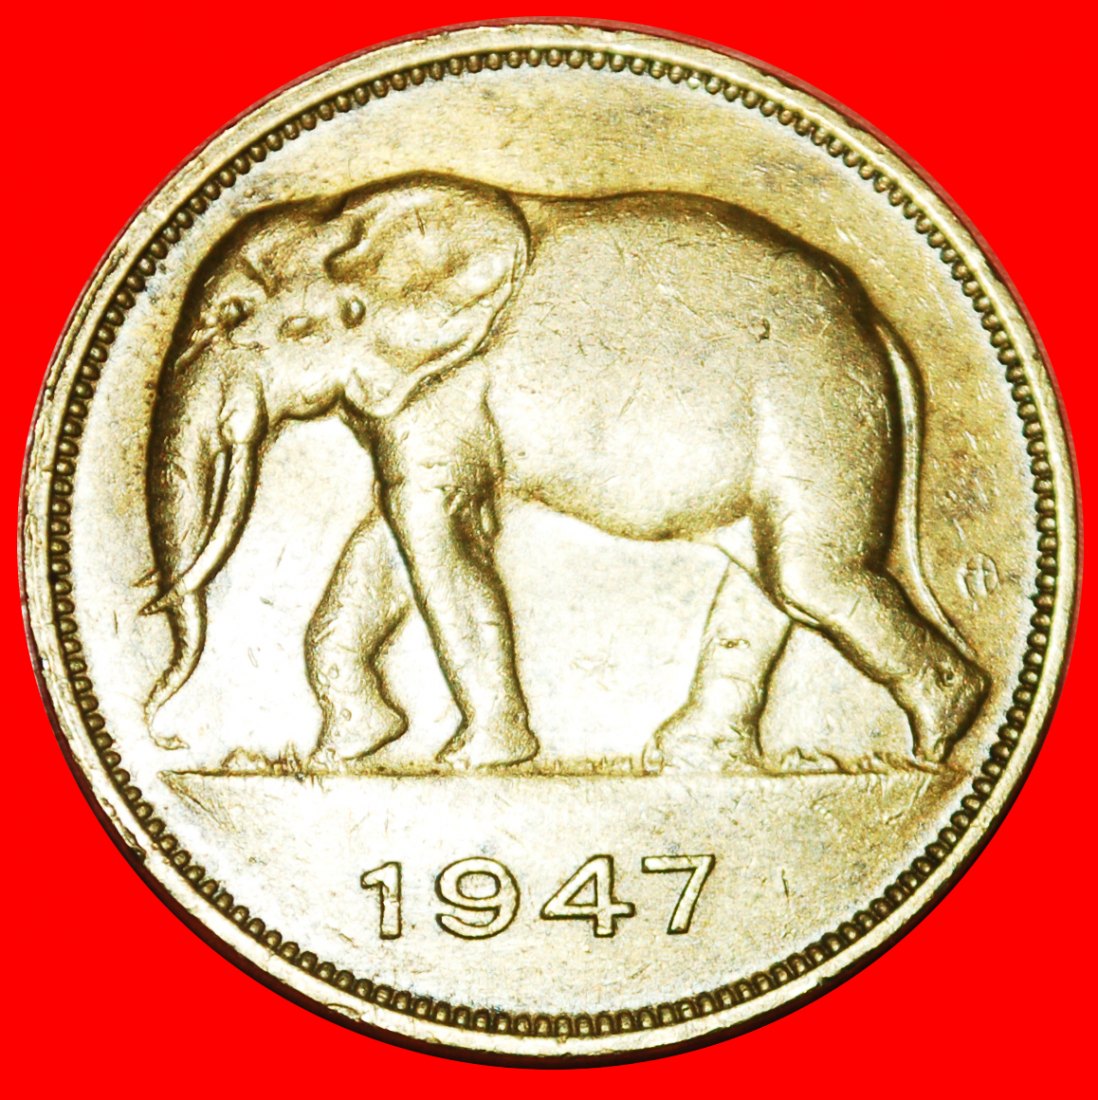  * SOUTH AFRICA ELEPHANT (1946-1947): BELGIAN CONGO ★ 5 FRANCS 1947 UNCOMMON! LOW START ★ NO RESERVE!   